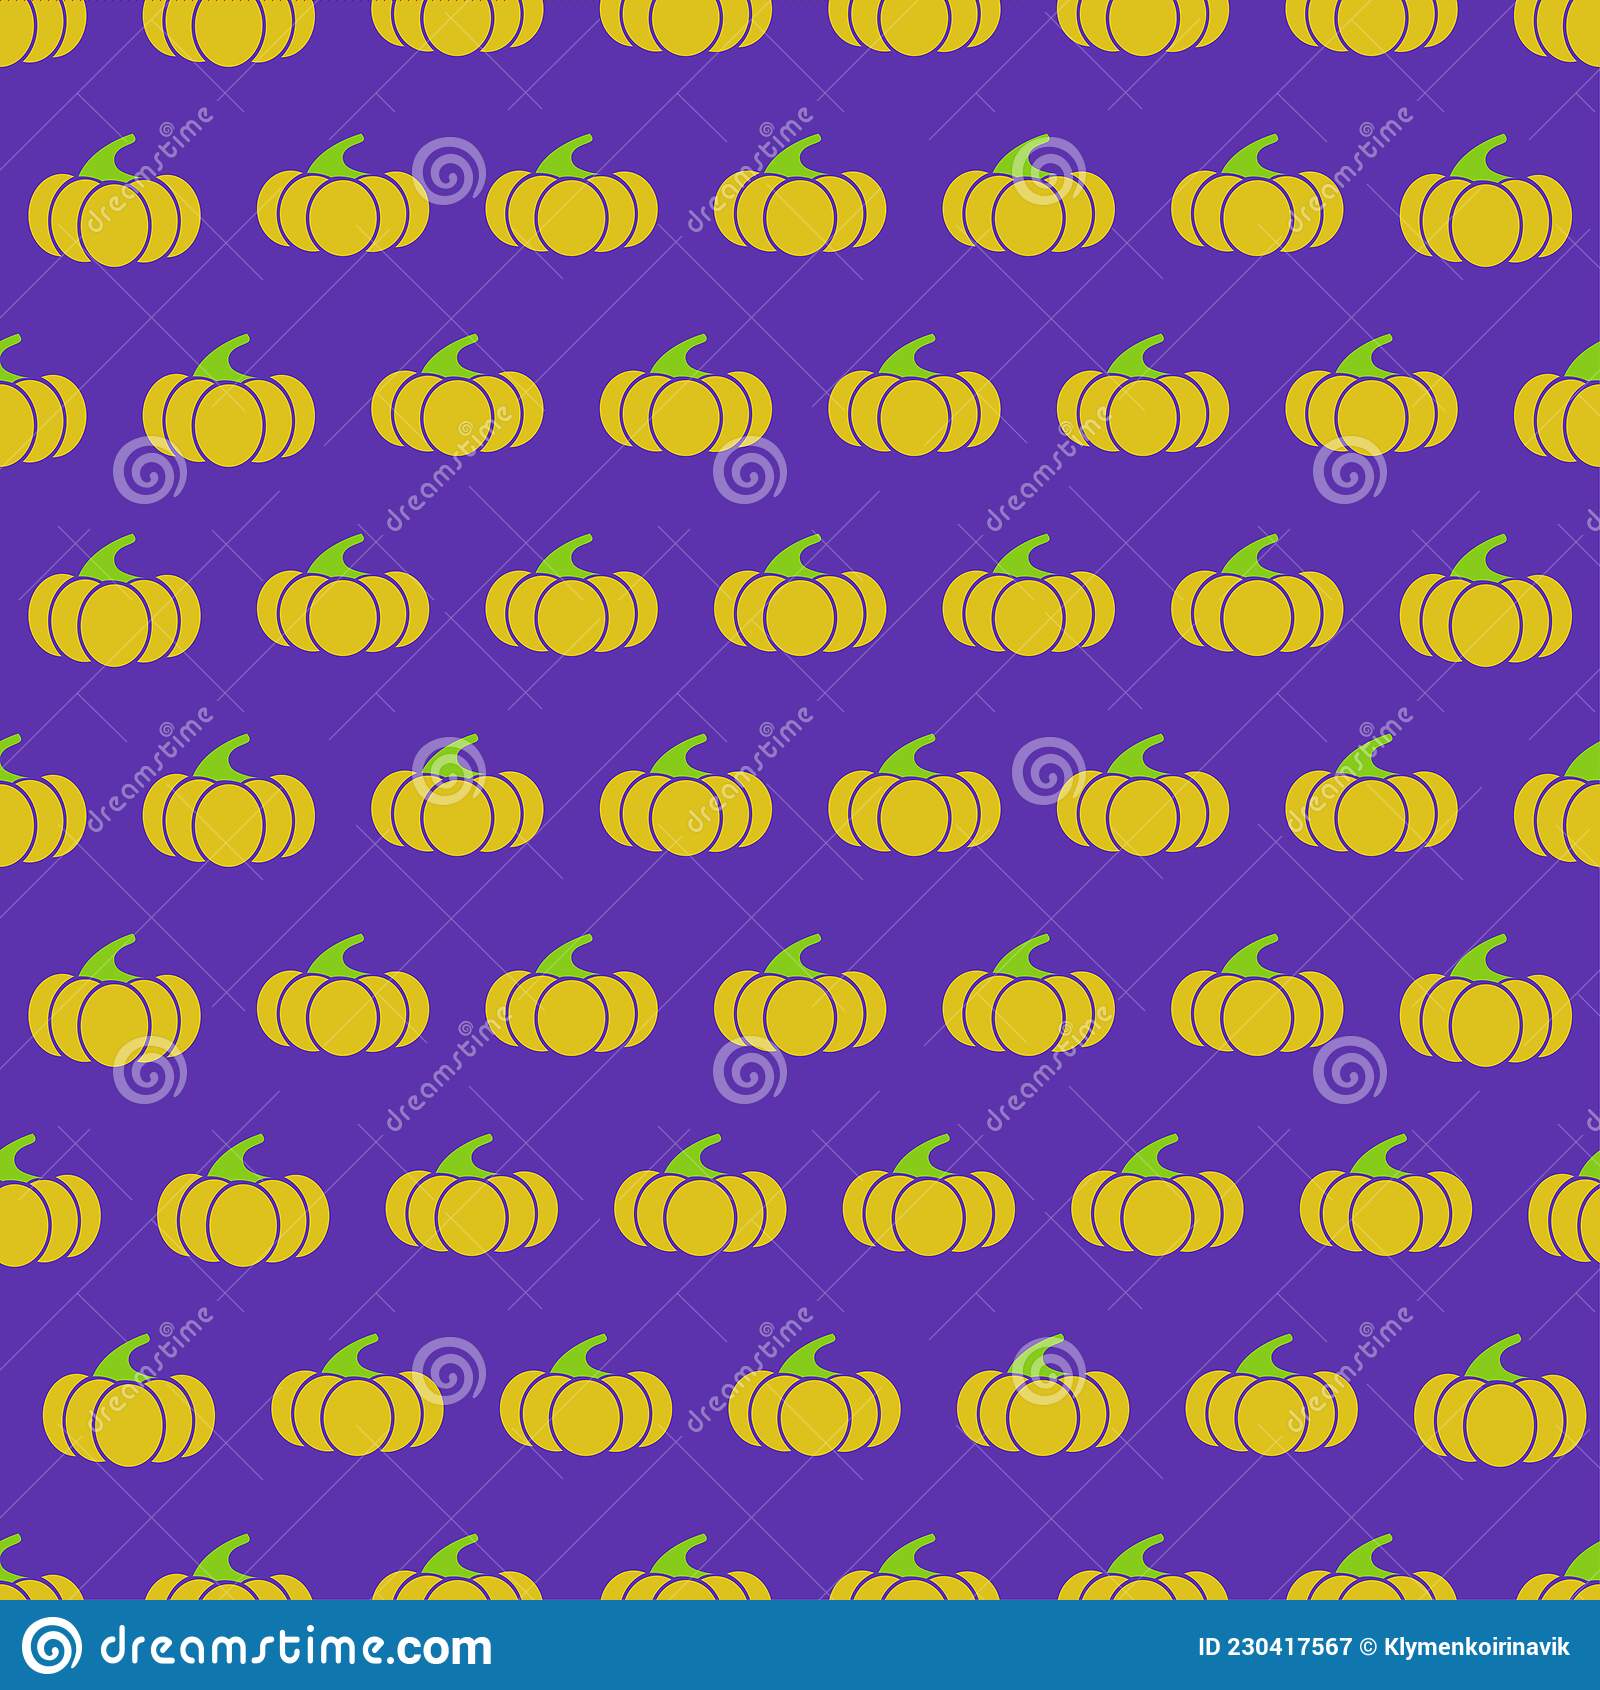 Seamless halloween pumpkin pattern yellow pumpkin on purple background stock vector